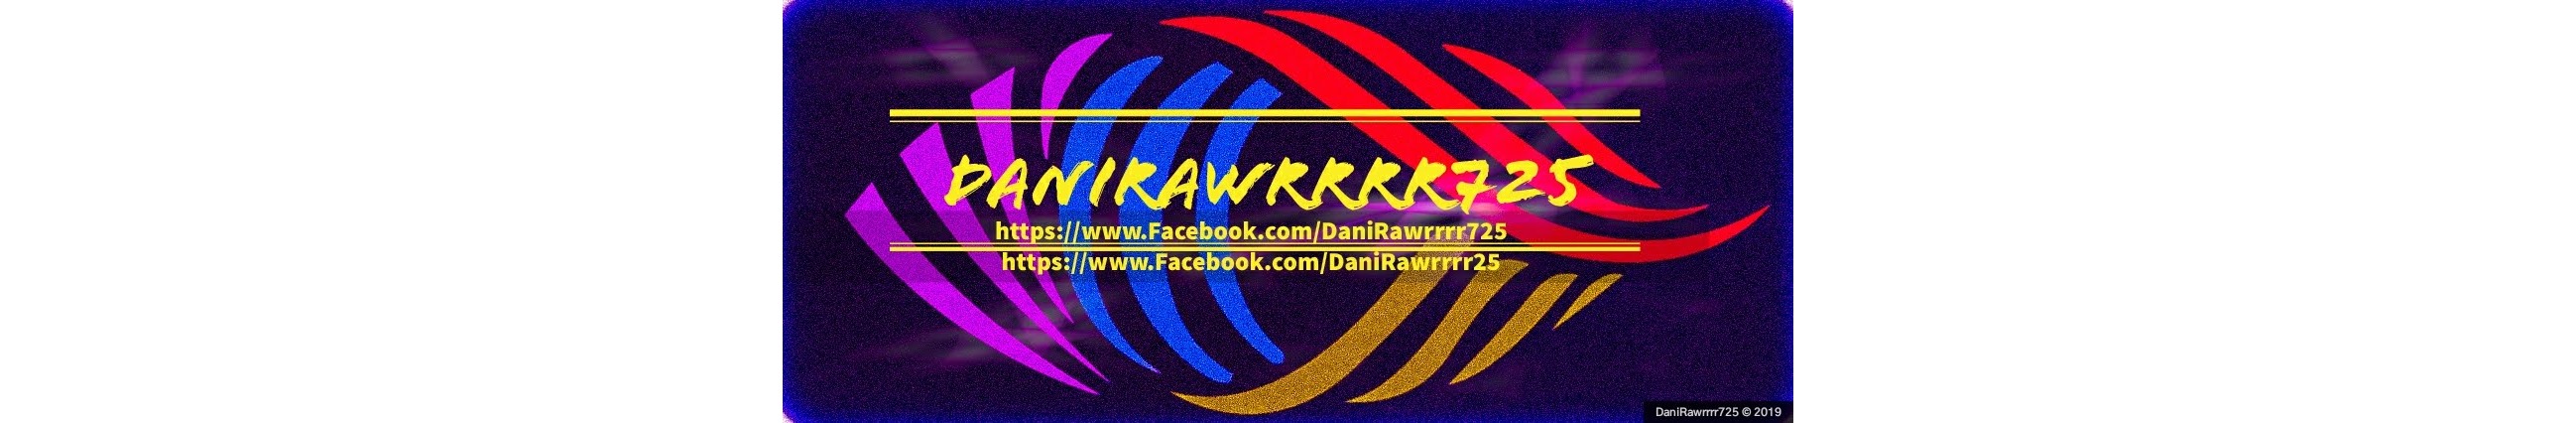 DaniRawwrrrr725 - profile image